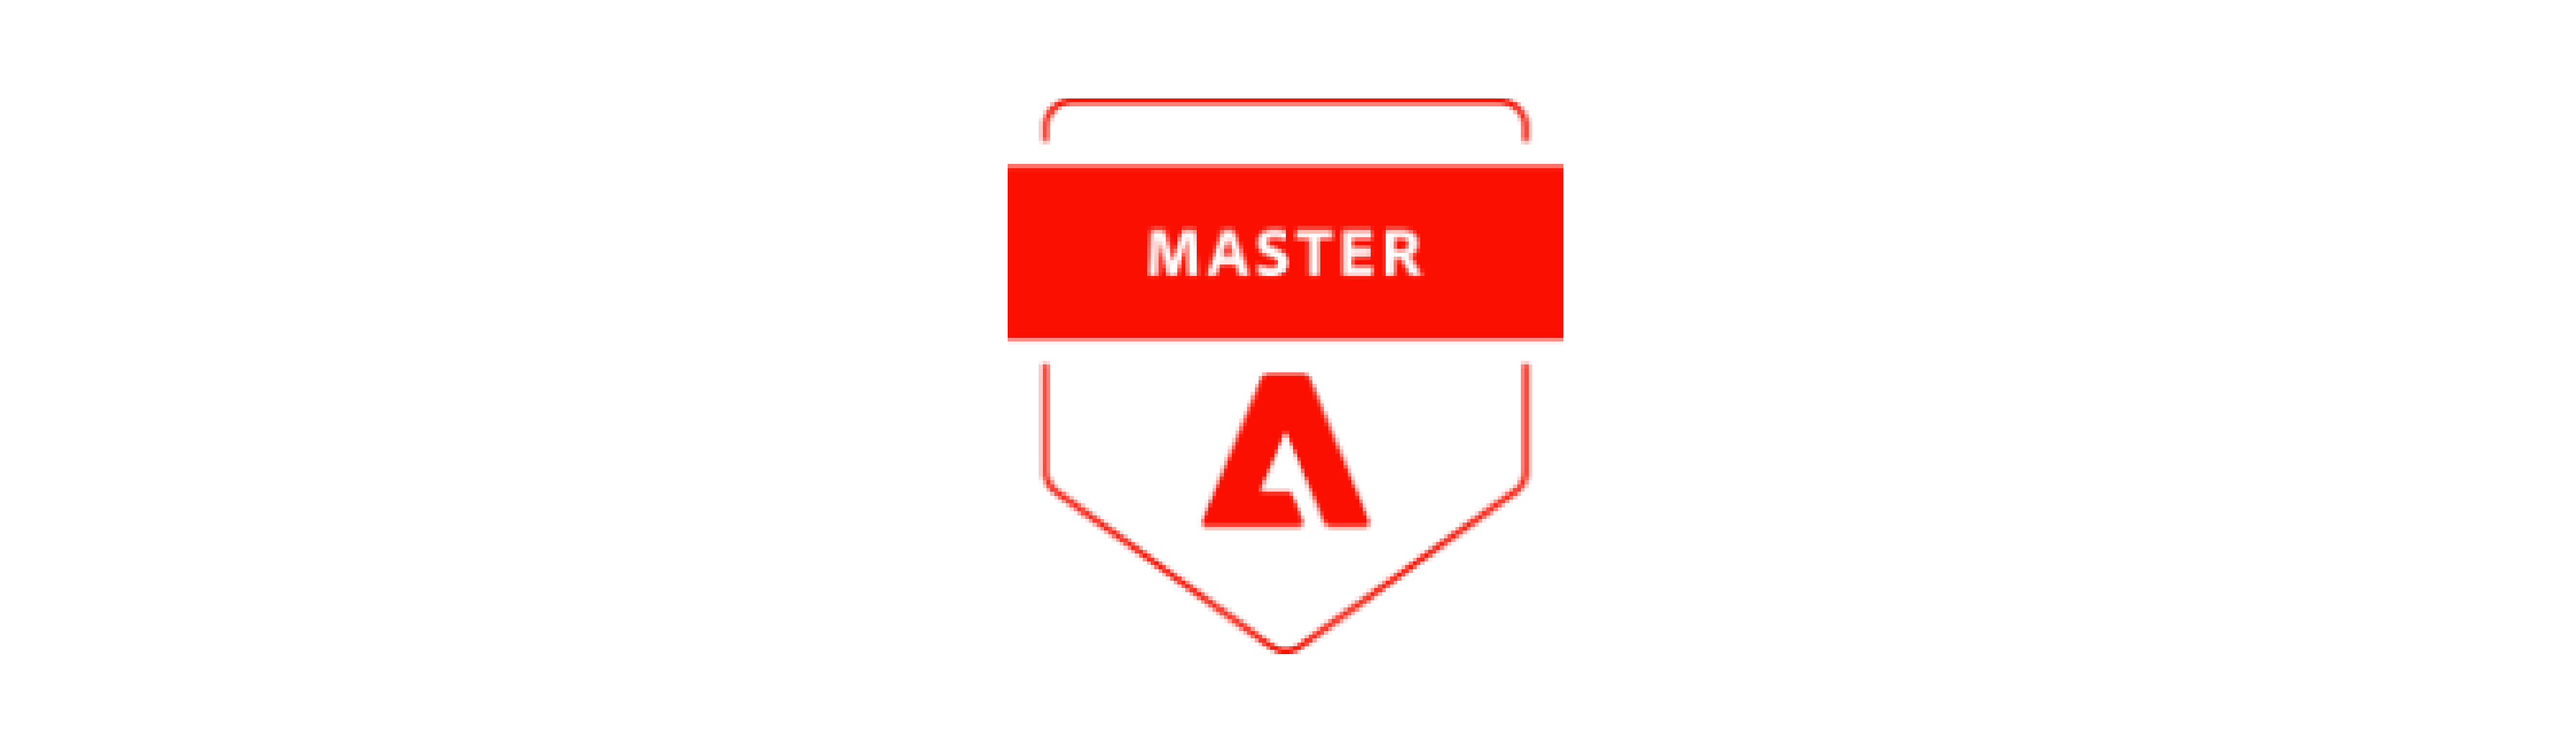 Master Magento Developers Certificate